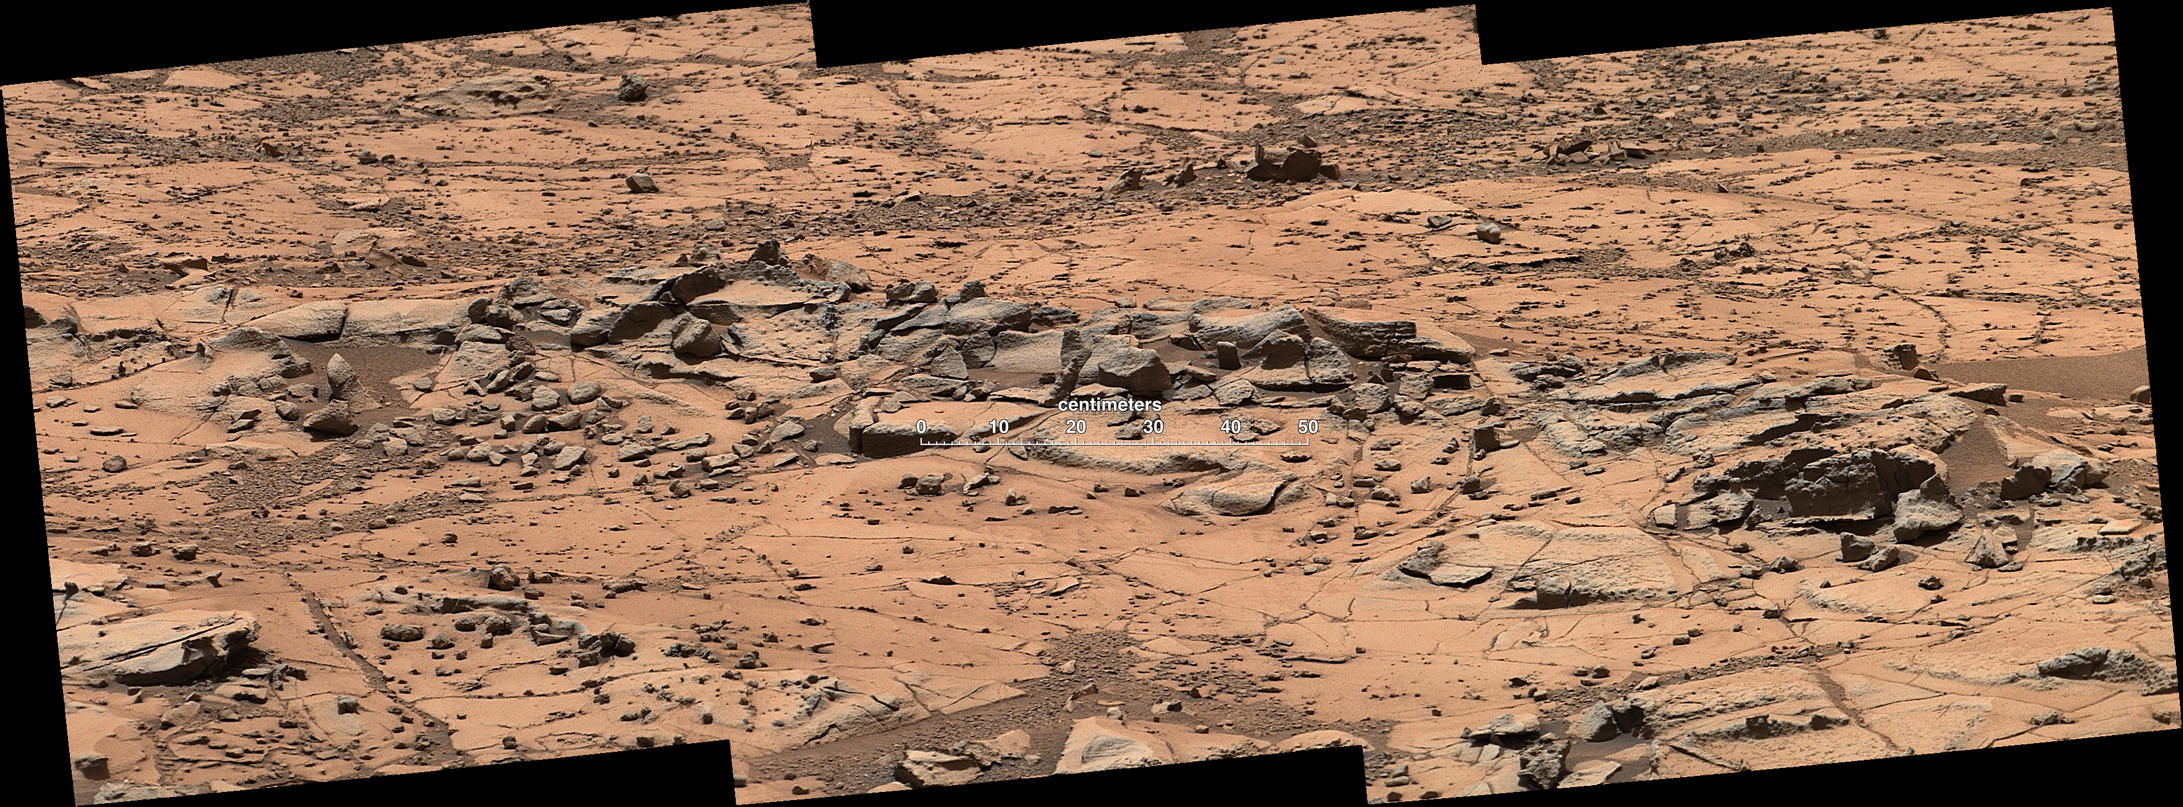 Erosion Resistance at 'Pink Cliffs' at Base of Martian Mount Sharp (Labeled)